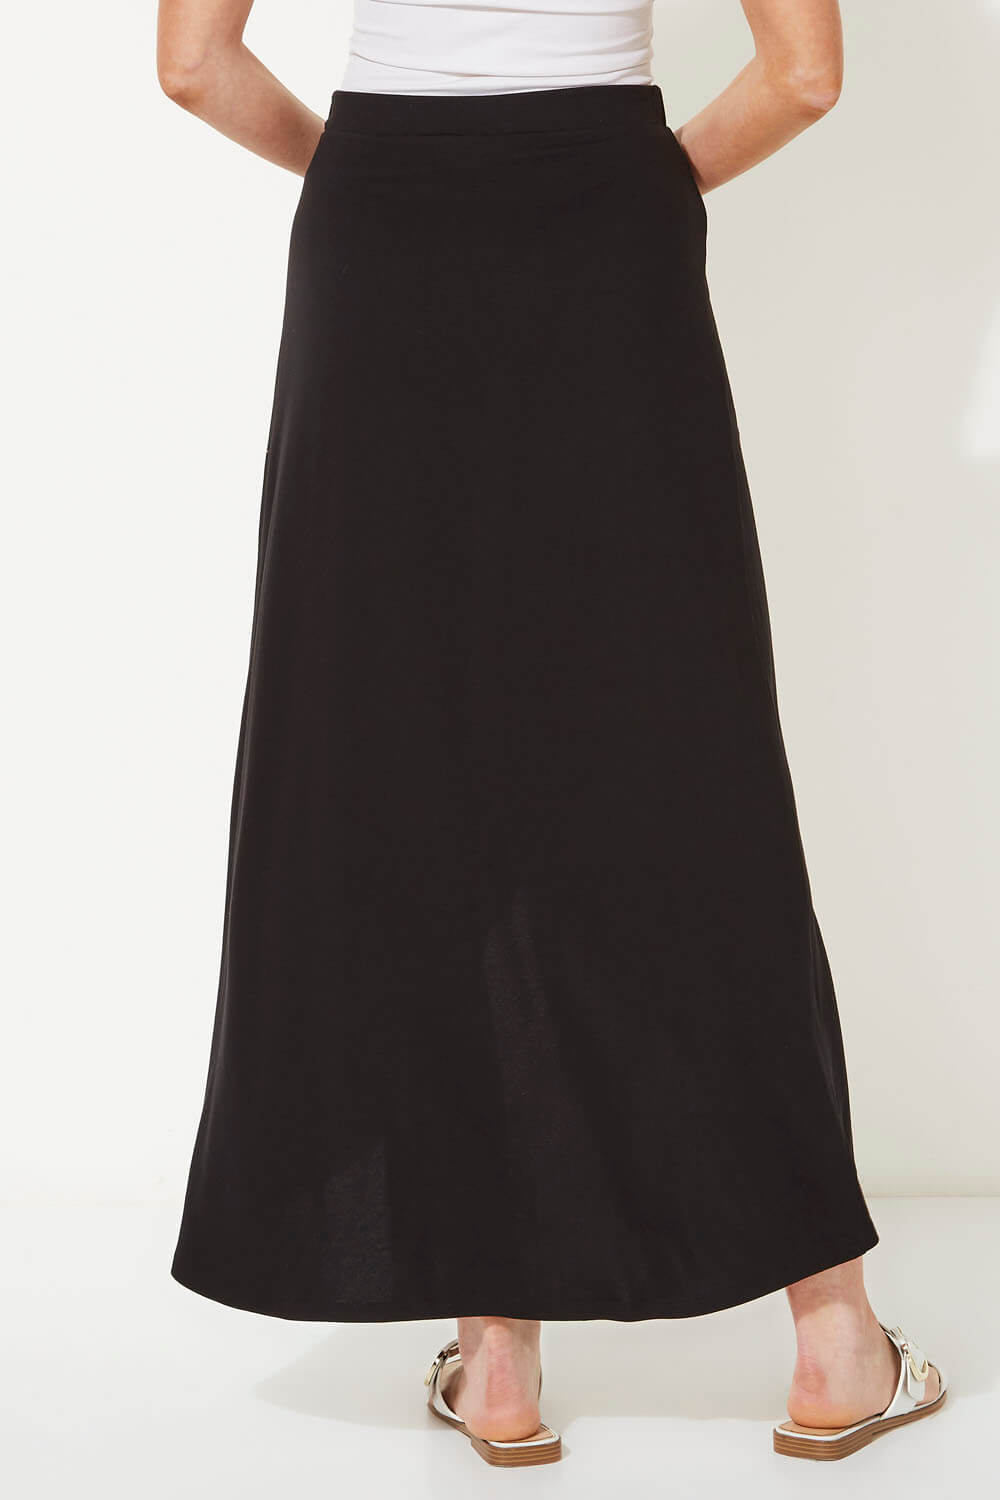 Black Jersey Wrap Asymmetric Maxi Skirt, Image 2 of 3